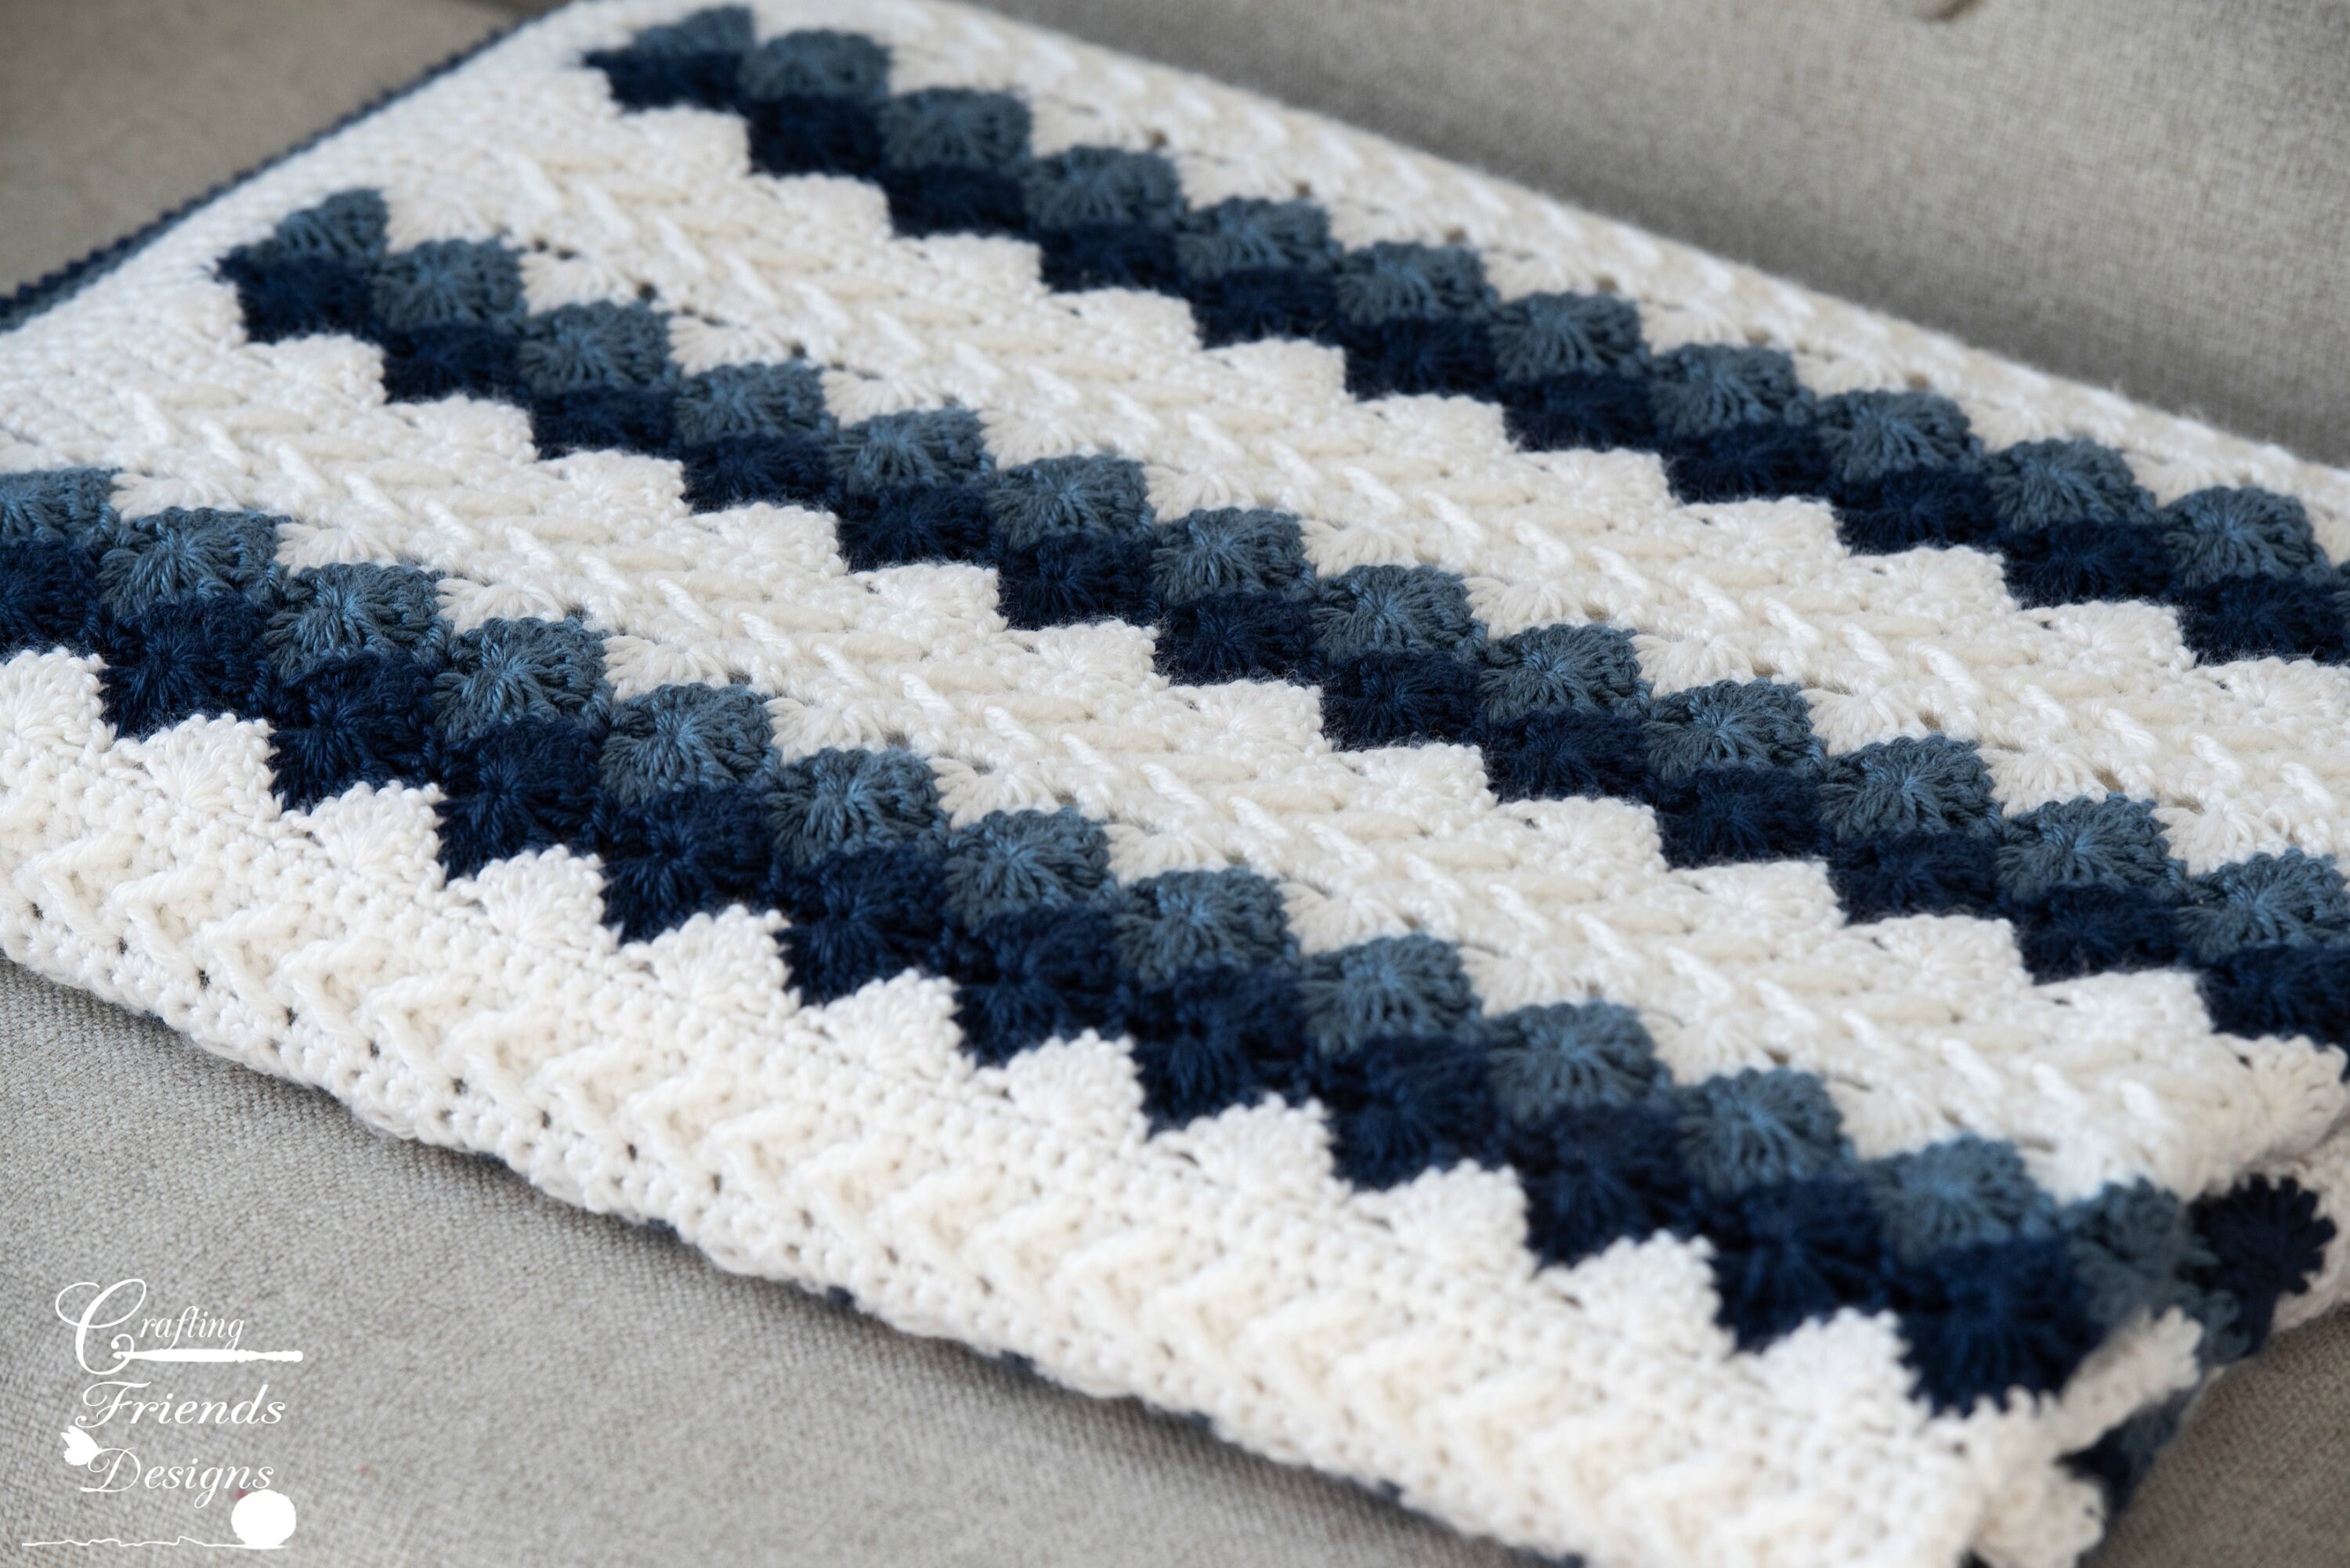 Crochet Blanket Patterns - Daisy Cottage Designs